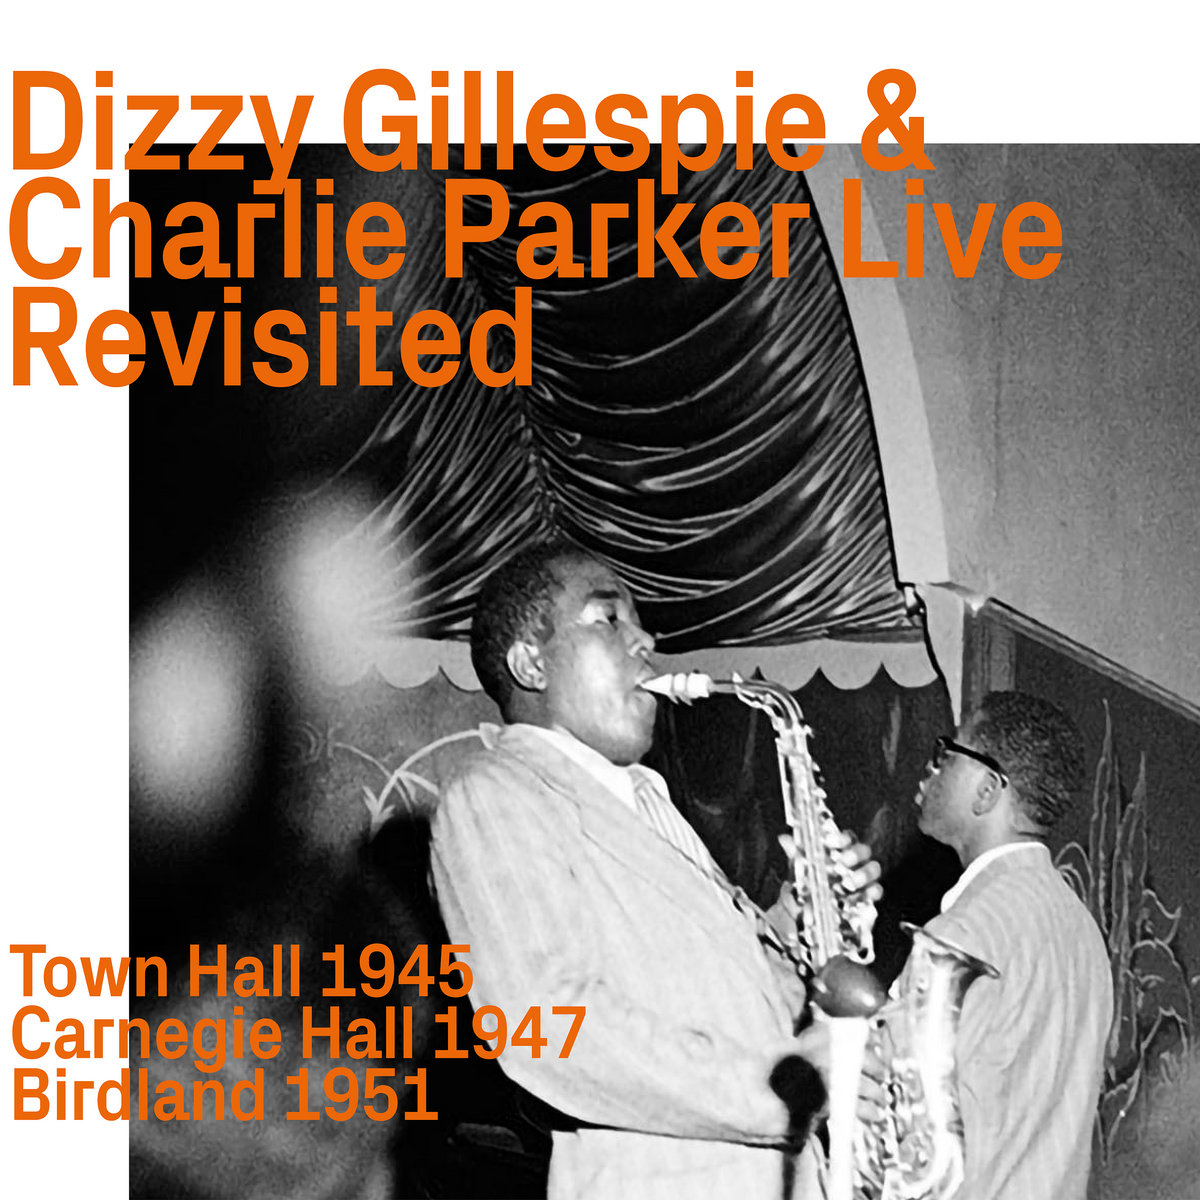 Dizzy Gillespie & Charlie Parker, Live Revisited